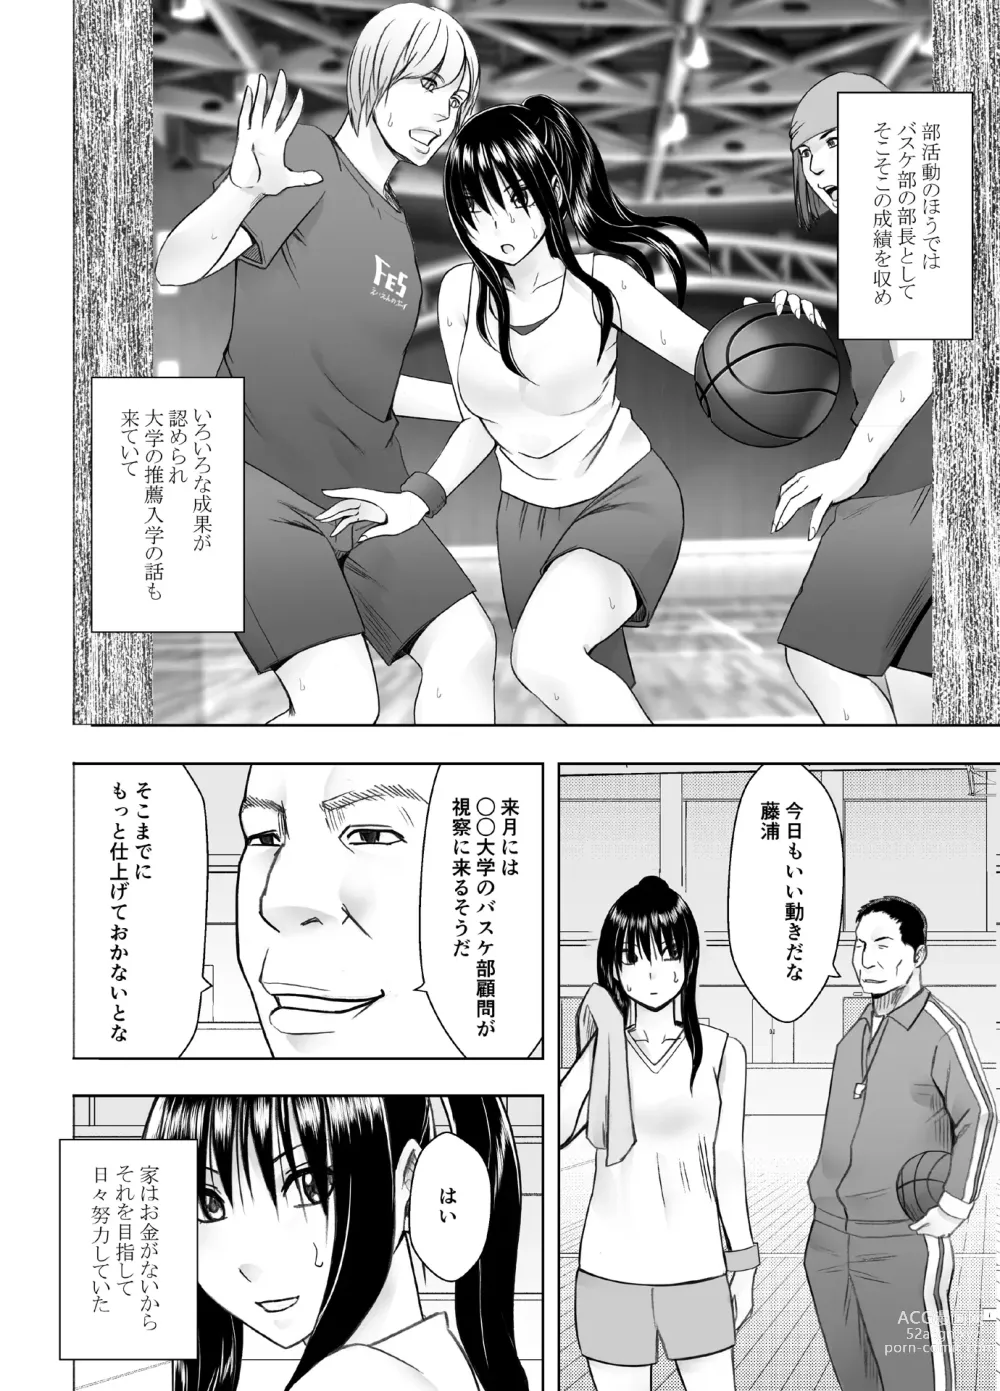 Page 3 of doujinshi Fuukiiinchou Fujiura Hinata Oppai Pub Hen